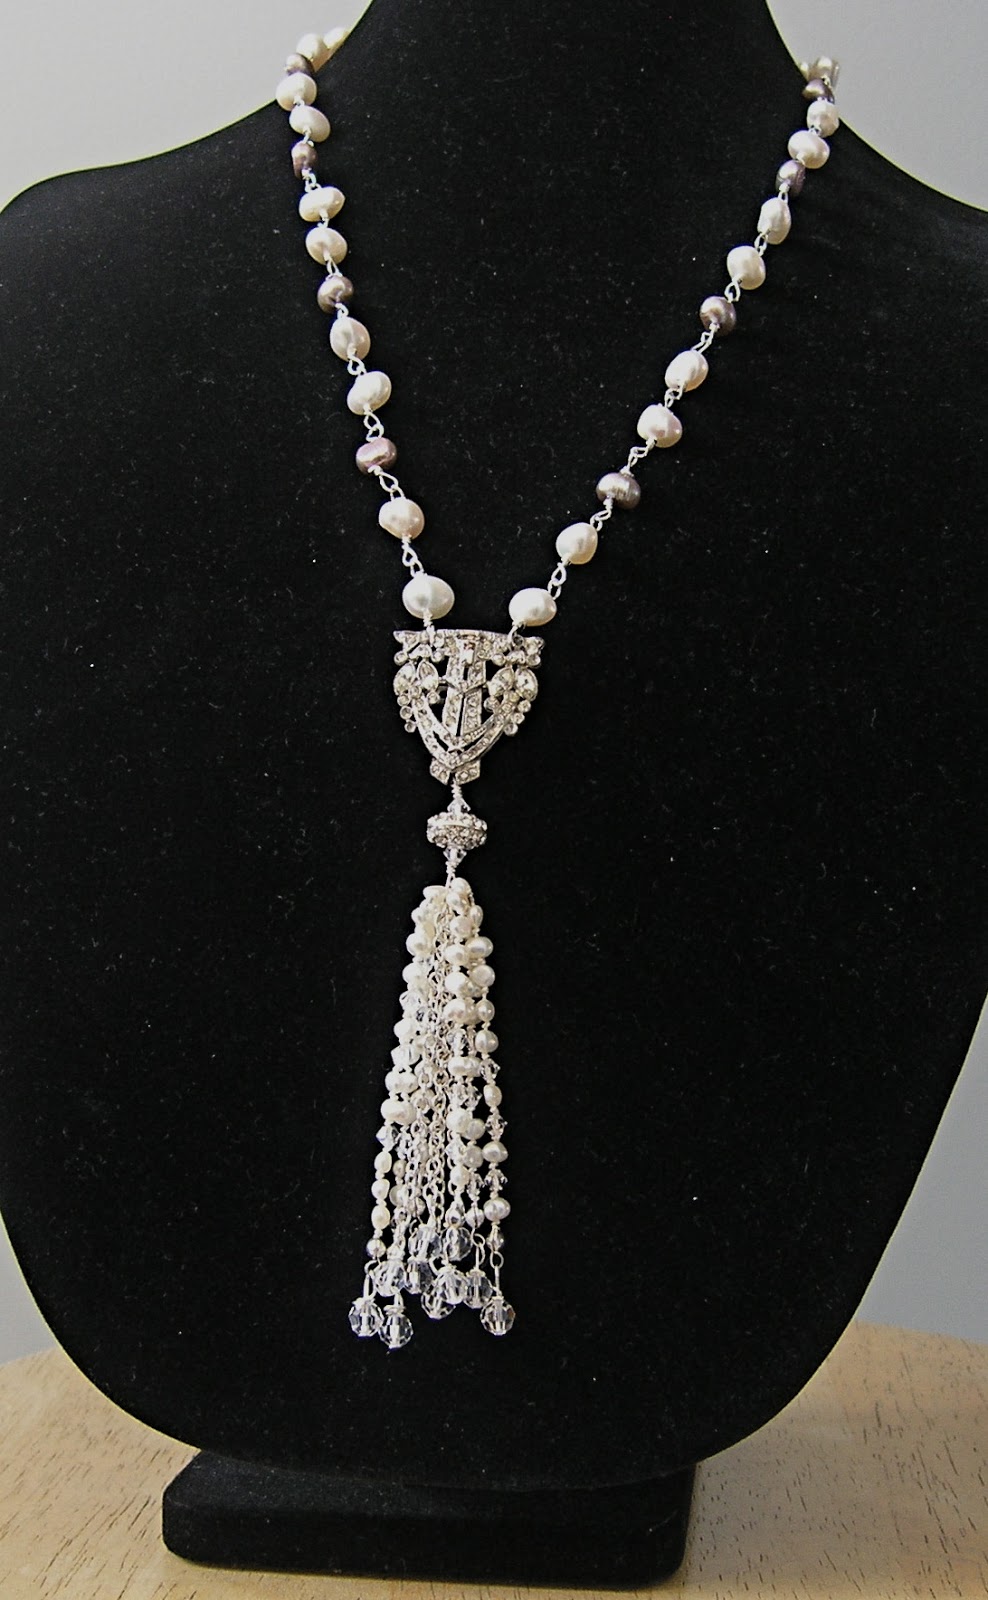 L'donna Jewelry: November 2012